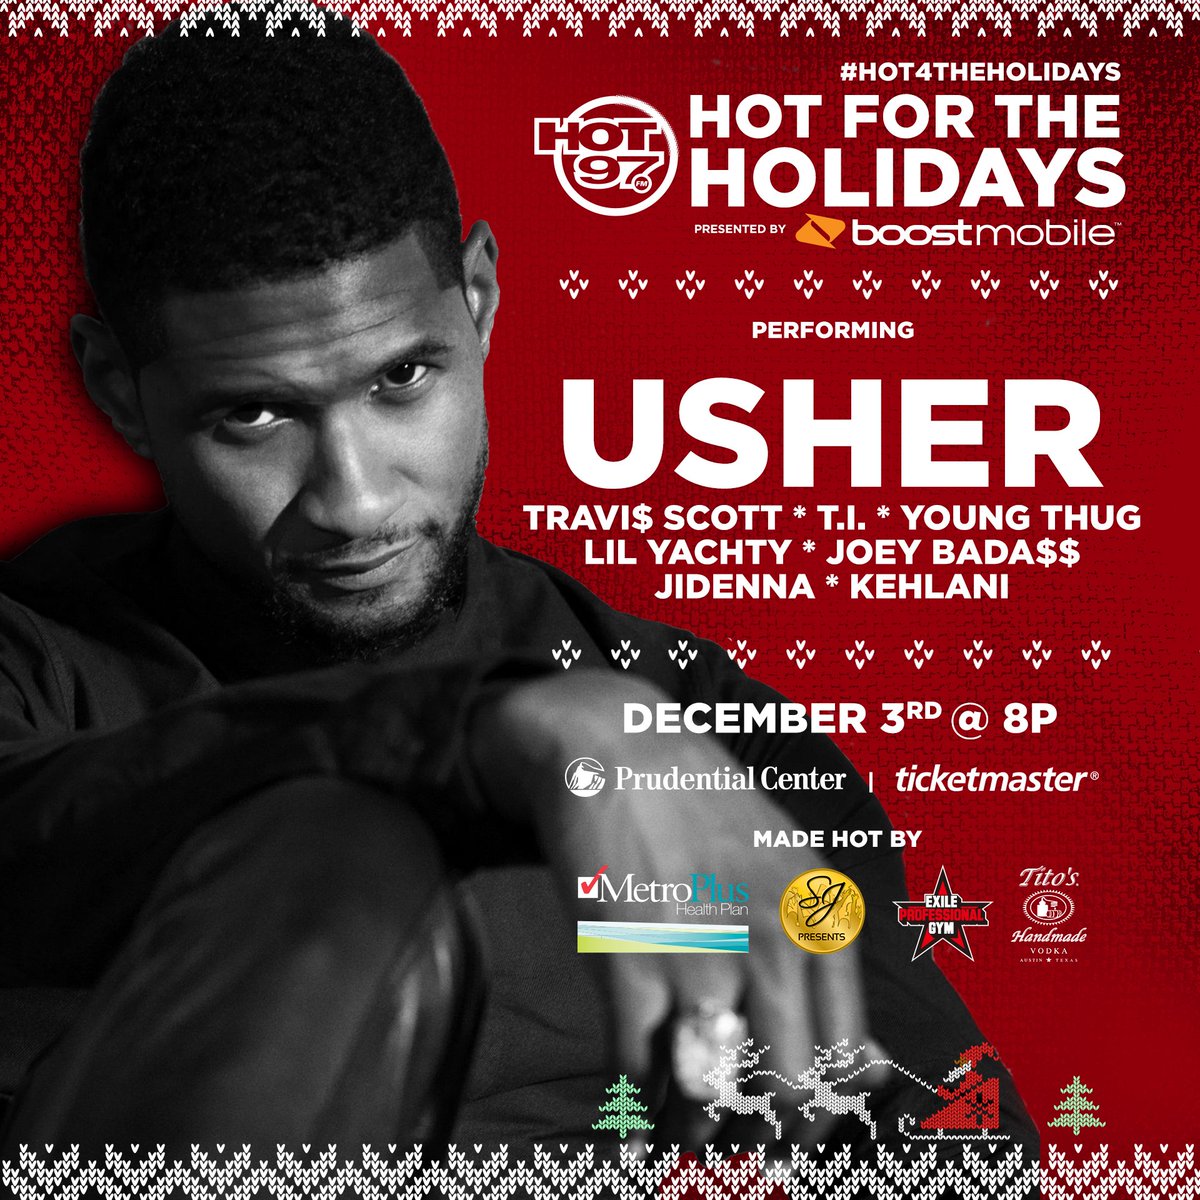 RT @HOT97: . @Usher added to the #Hot4TheHolidays lineup! 
Buy Tickets: https://t.co/cbi4alEKuU https://t.co/ggOAhyp5oq